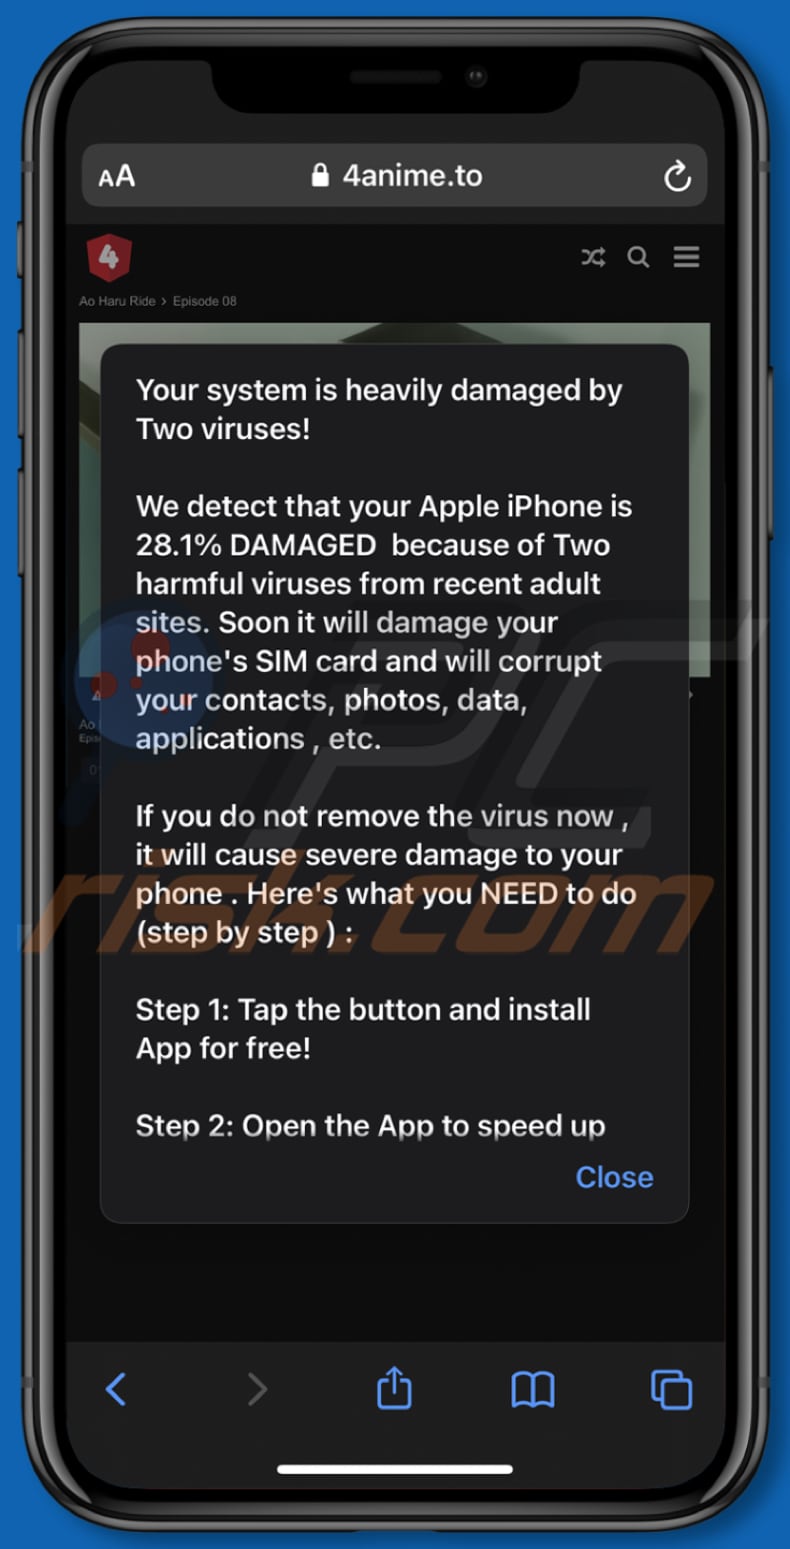 4anime.to ads fake virus alert pop-up